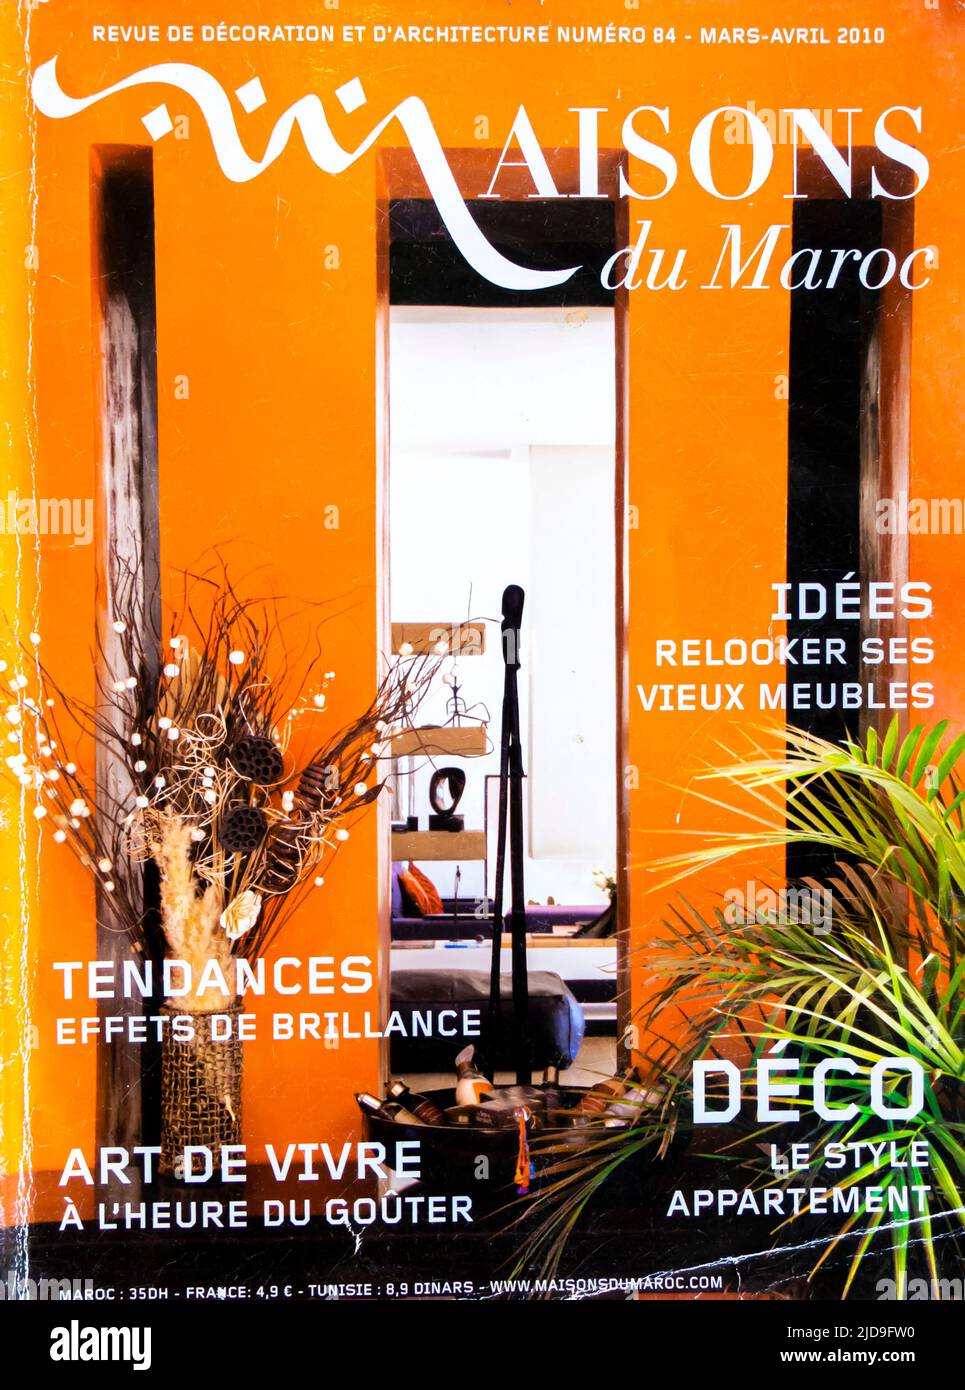 Maisons du Maroc - Architecture and design Moroccan magazine cover - march-April 2010 Stock Photo